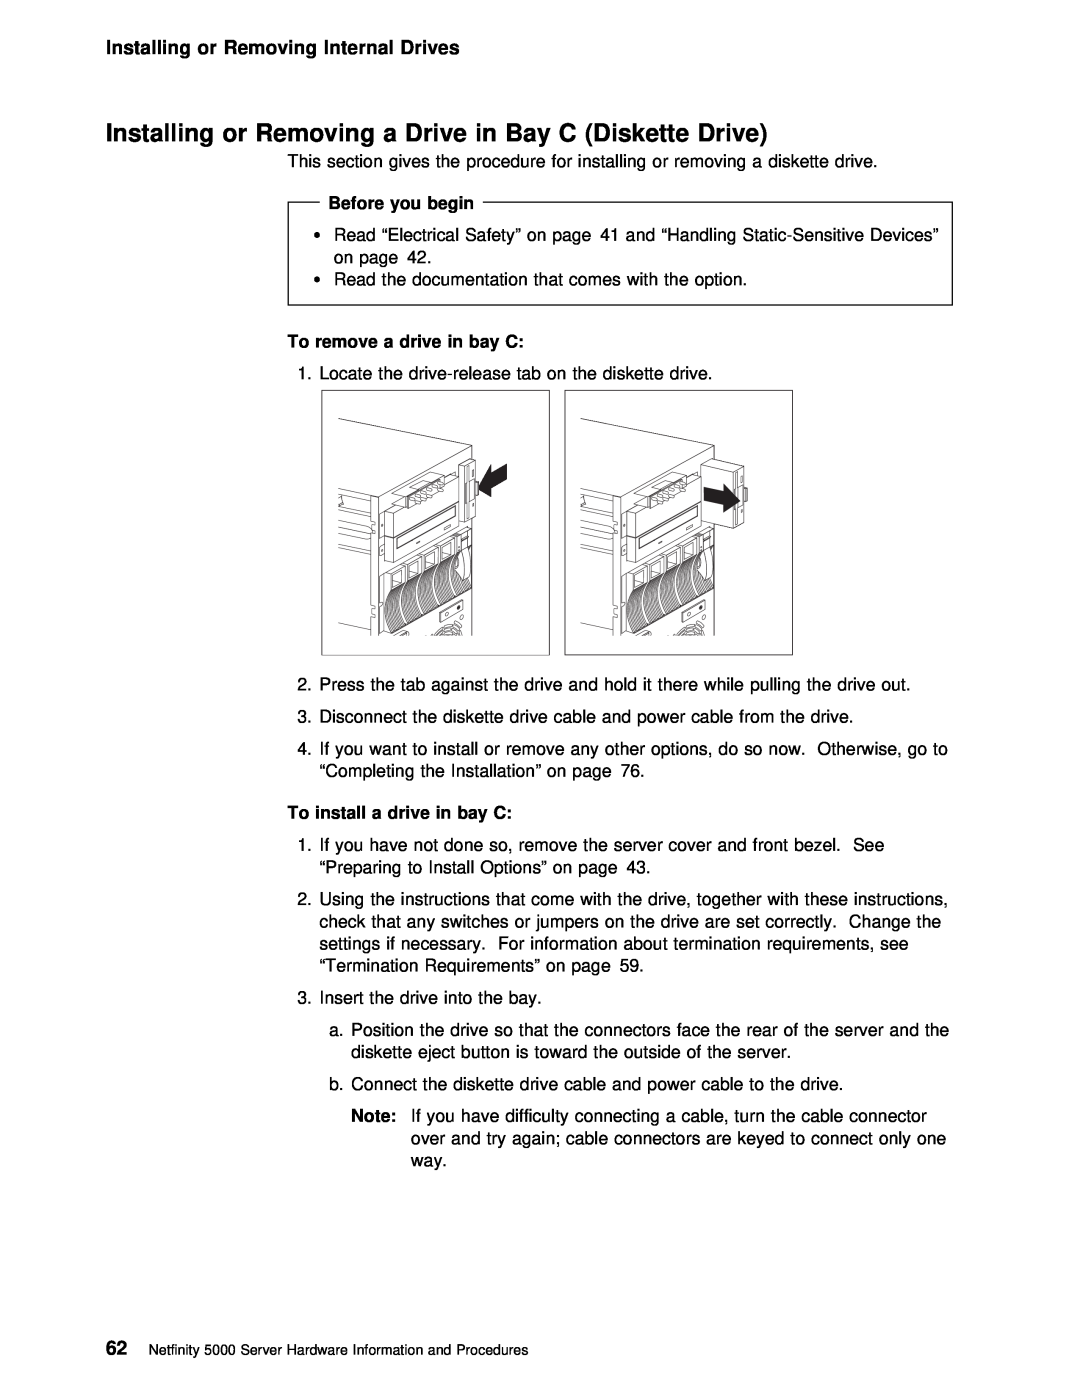 IBM 5000 manual Diskette Drive, Installing or Removing Internal Drives 